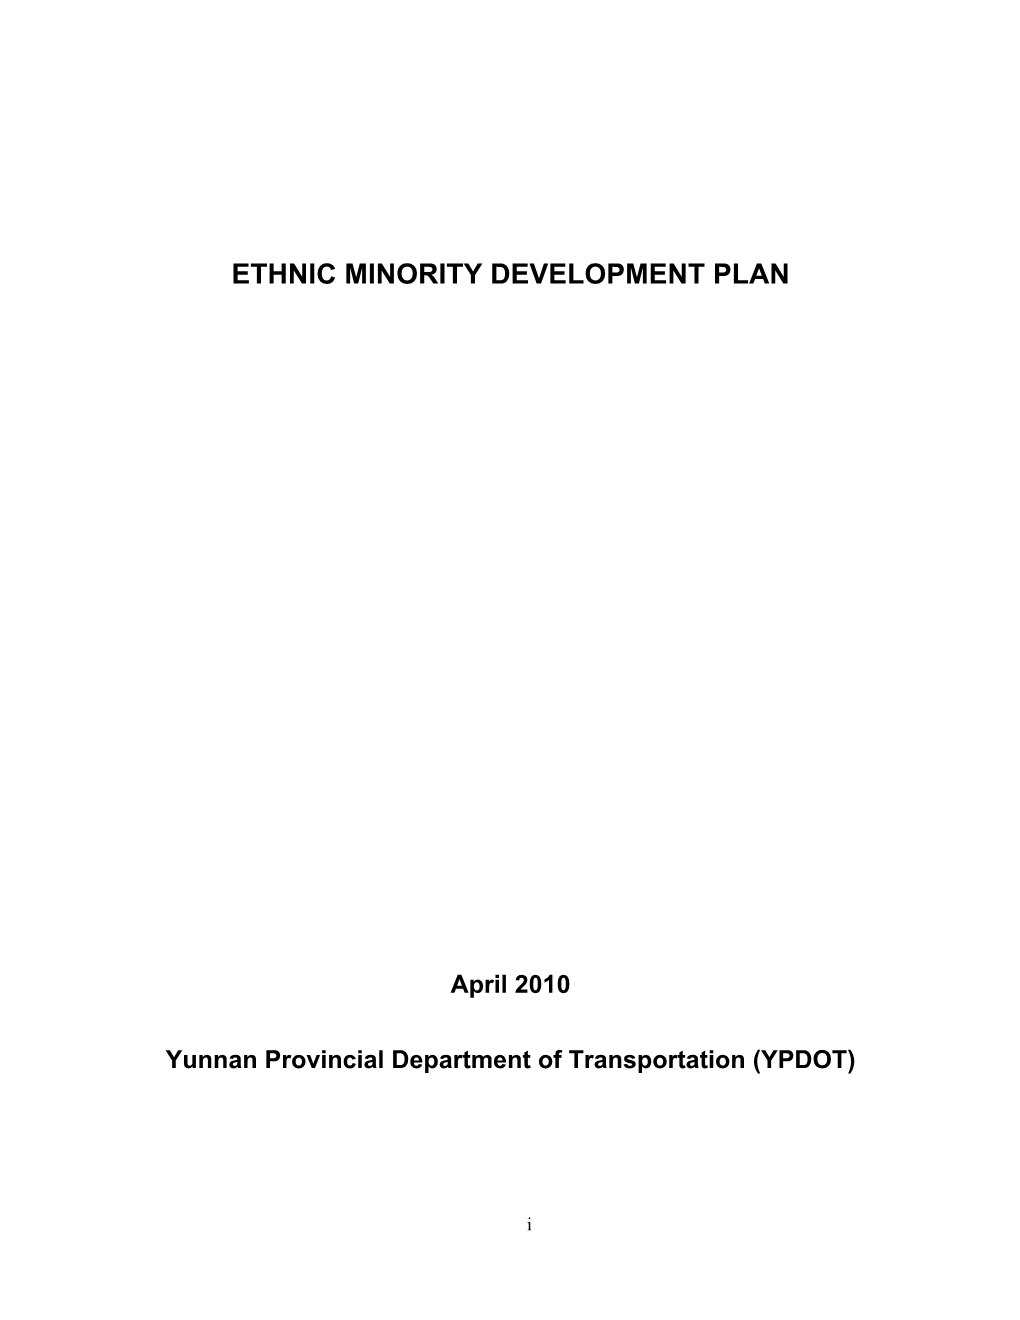 Ethnic Minority Development Plan